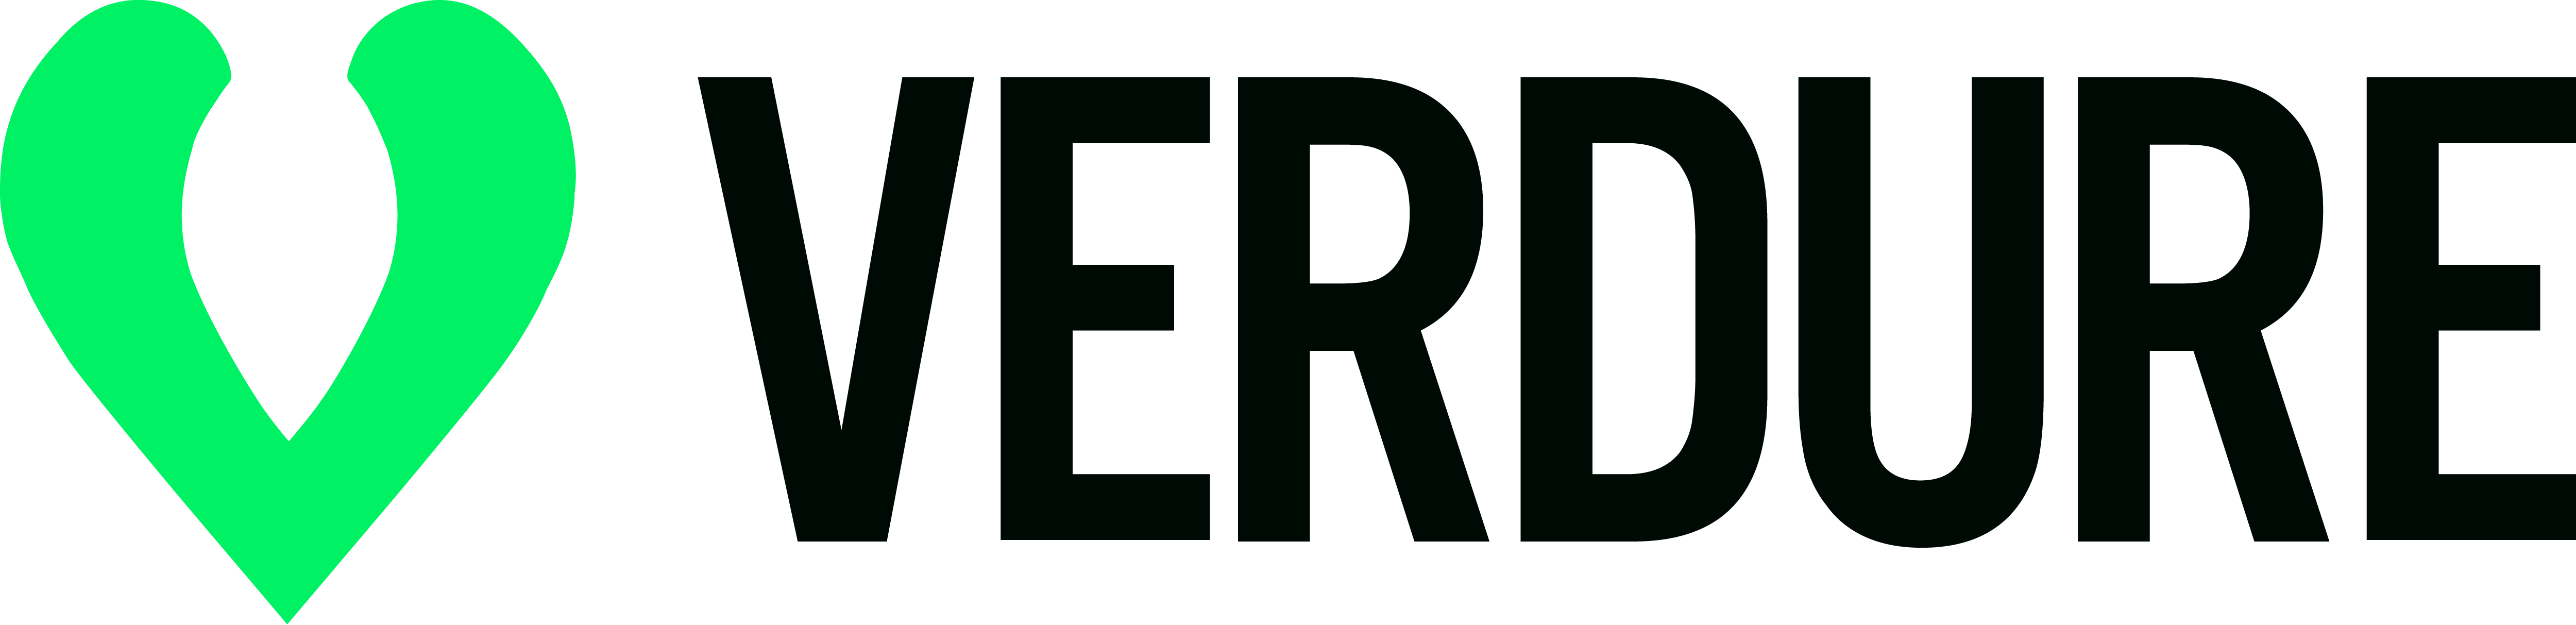 VERDURE Medienteam GmbH logo